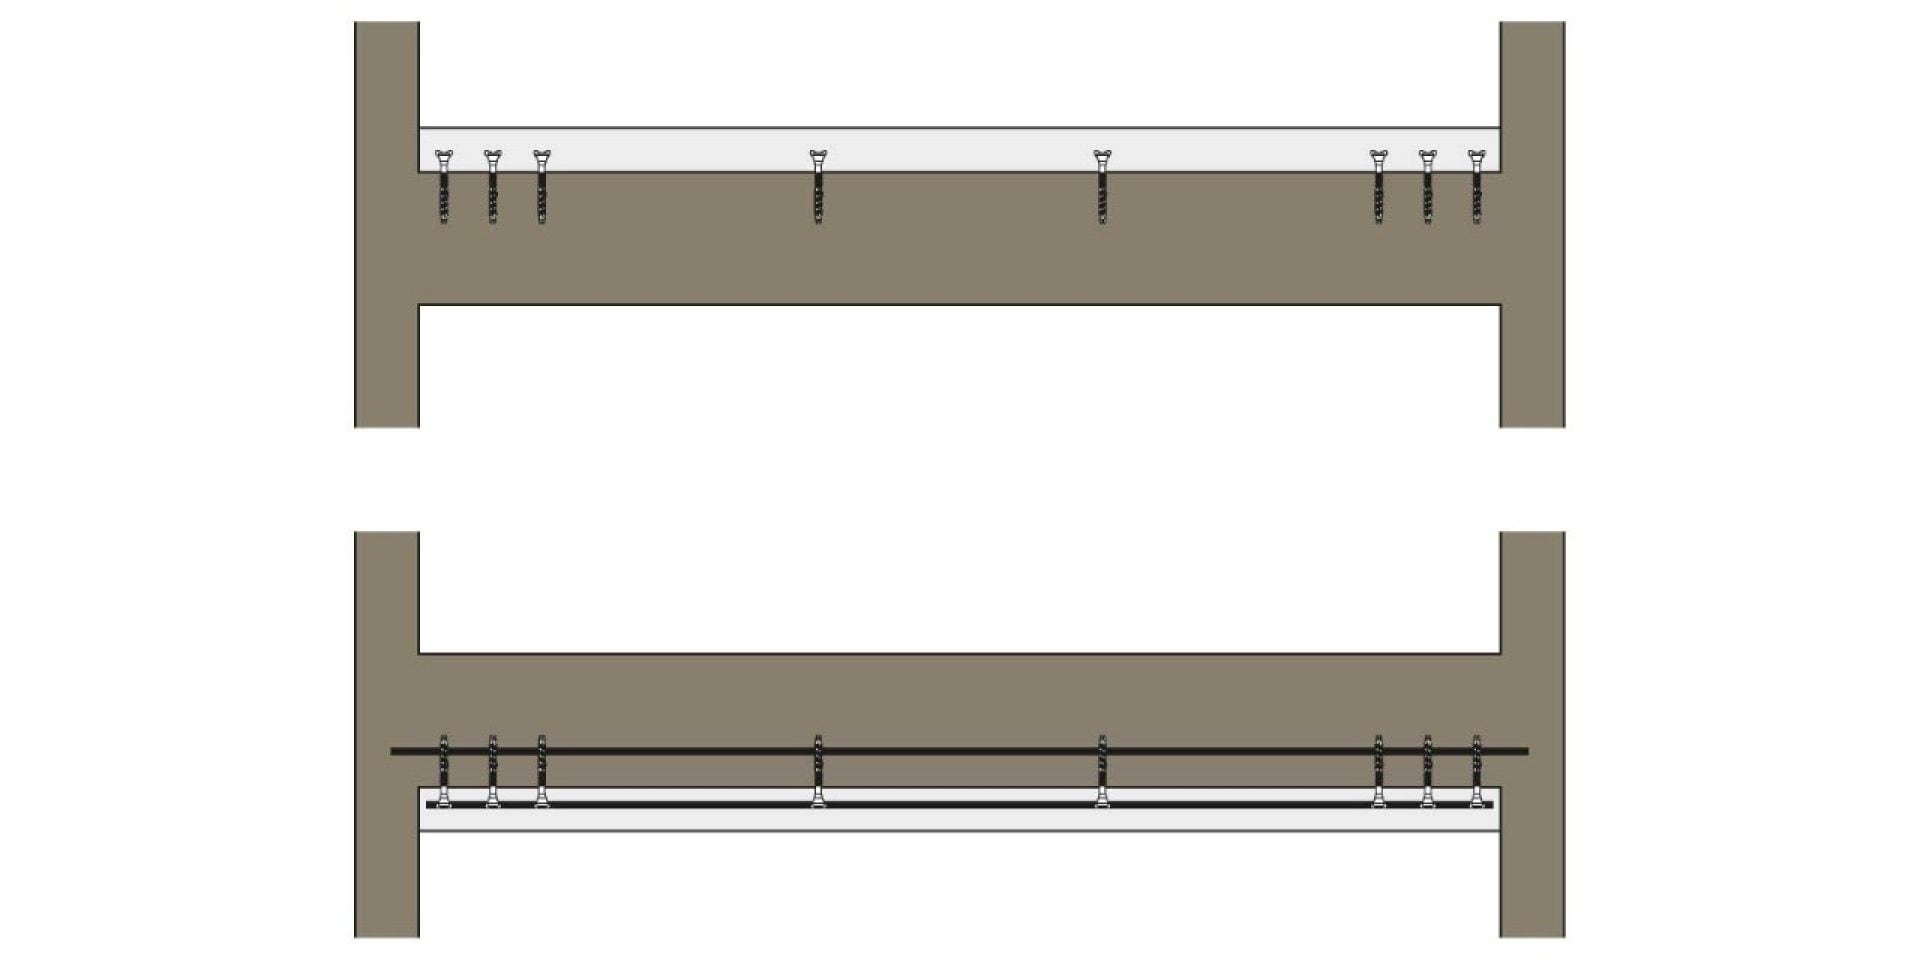 Post installed rebar concrete overlay Hilti design solution